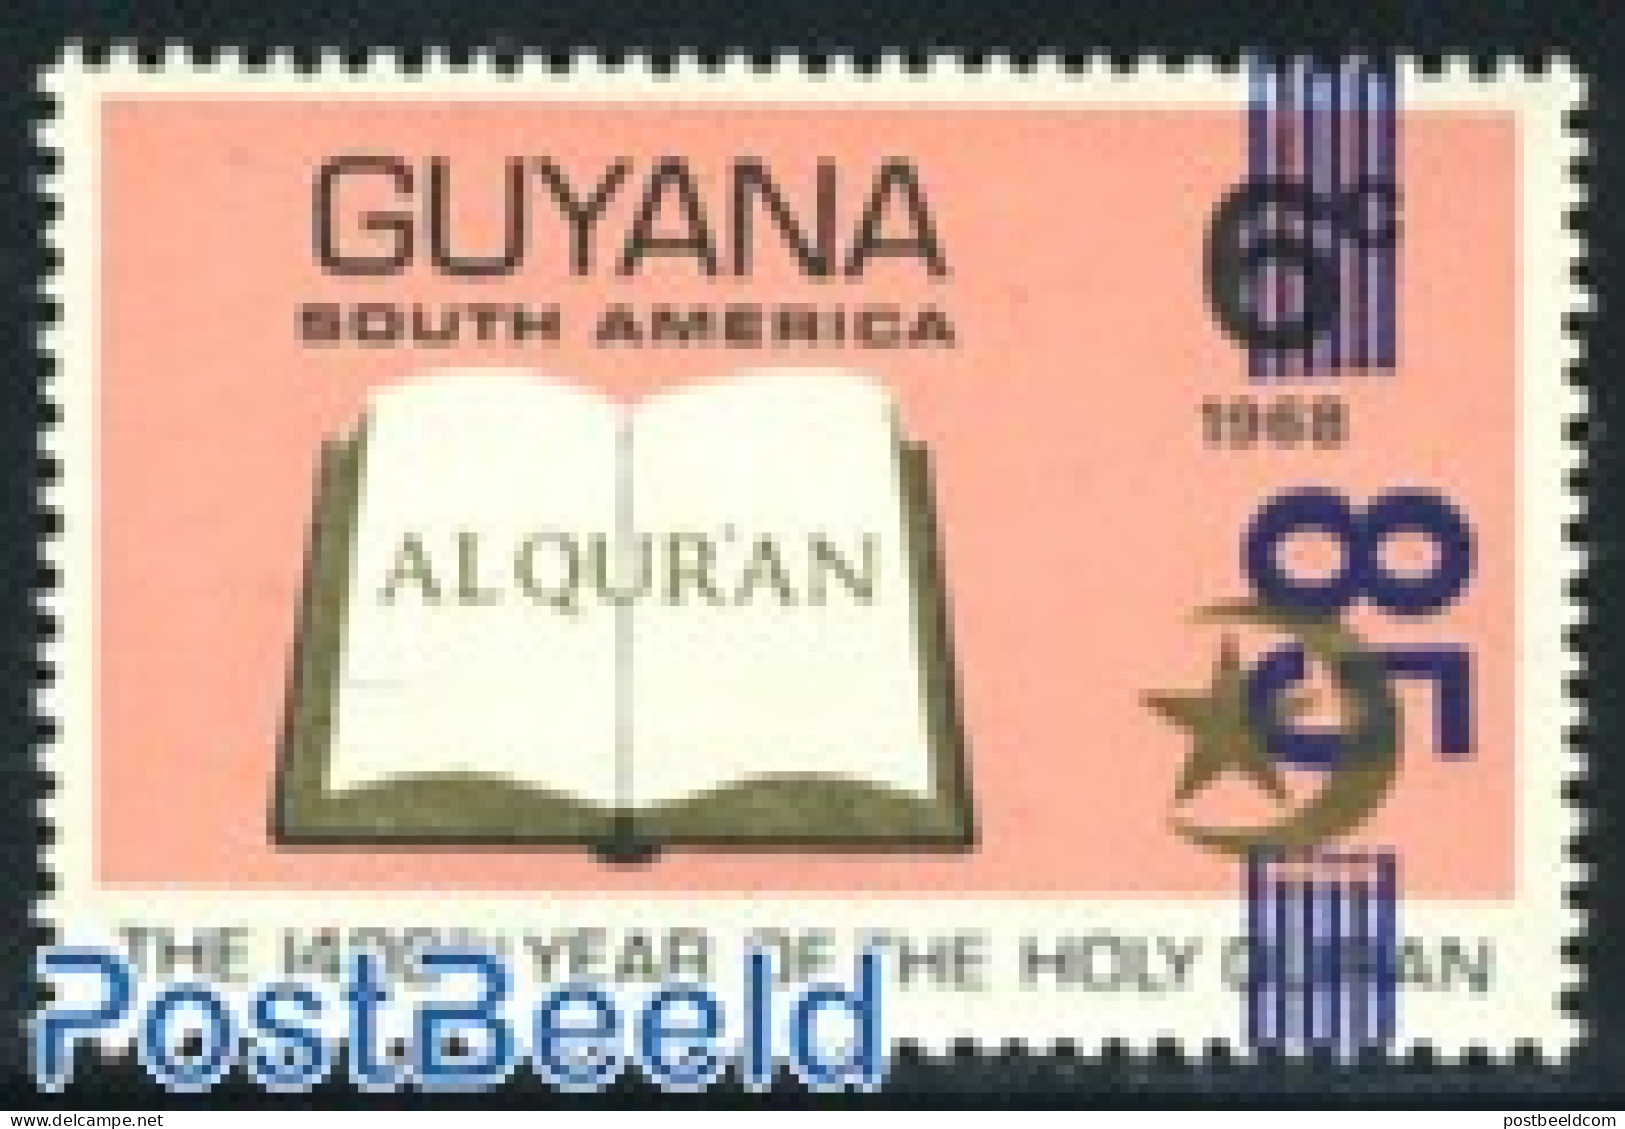 Guyana 1982 Stamp Out Of Set, Mint NH, Art - Books - Guyana (1966-...)